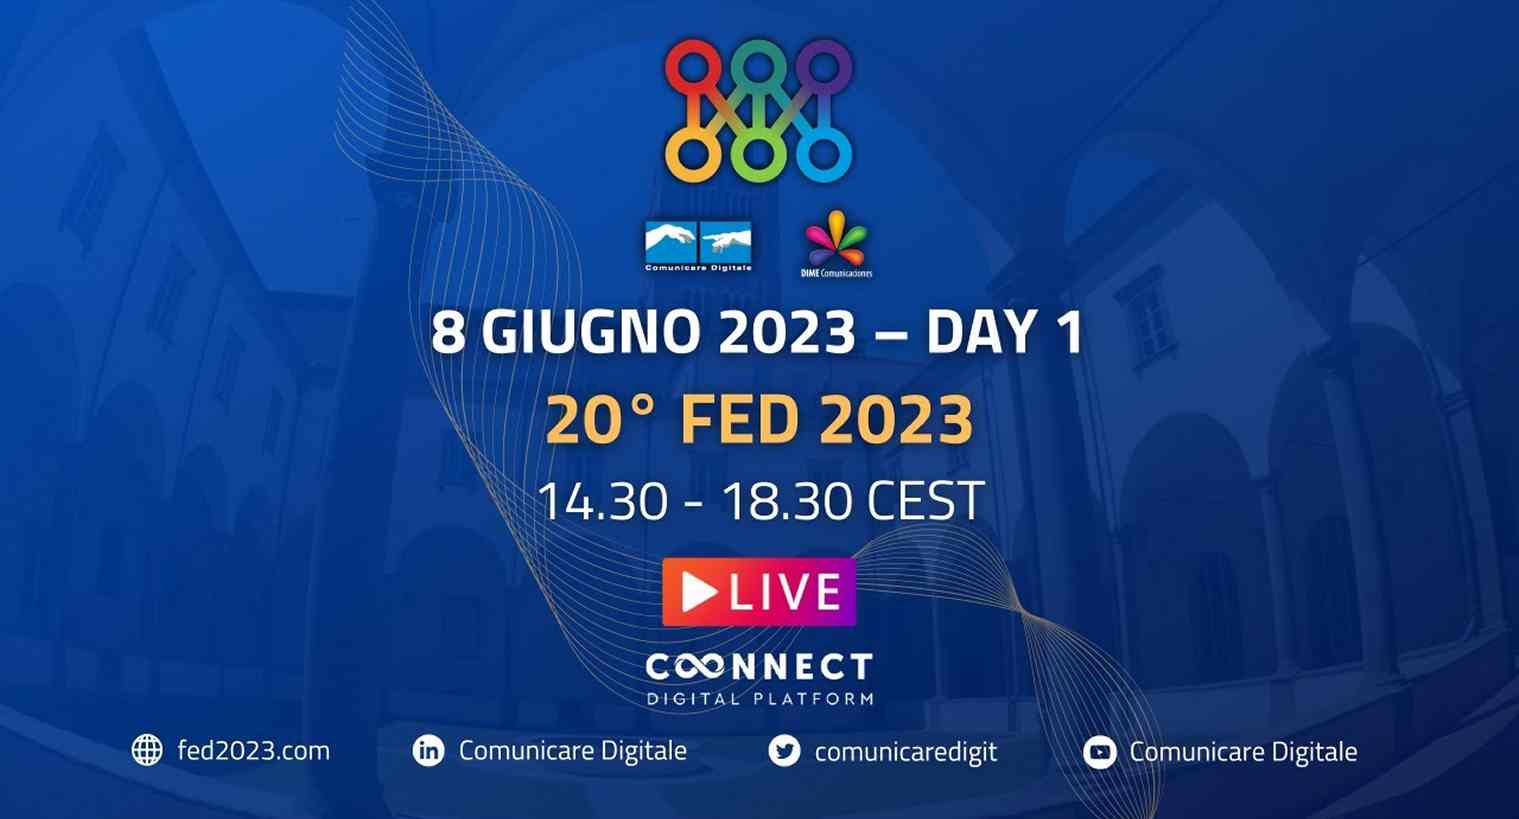 20 Forum Europeo Digitale, Lucca 2023 #1, diretta streaming Digital-News.it - 8 Giugno | #FED2023